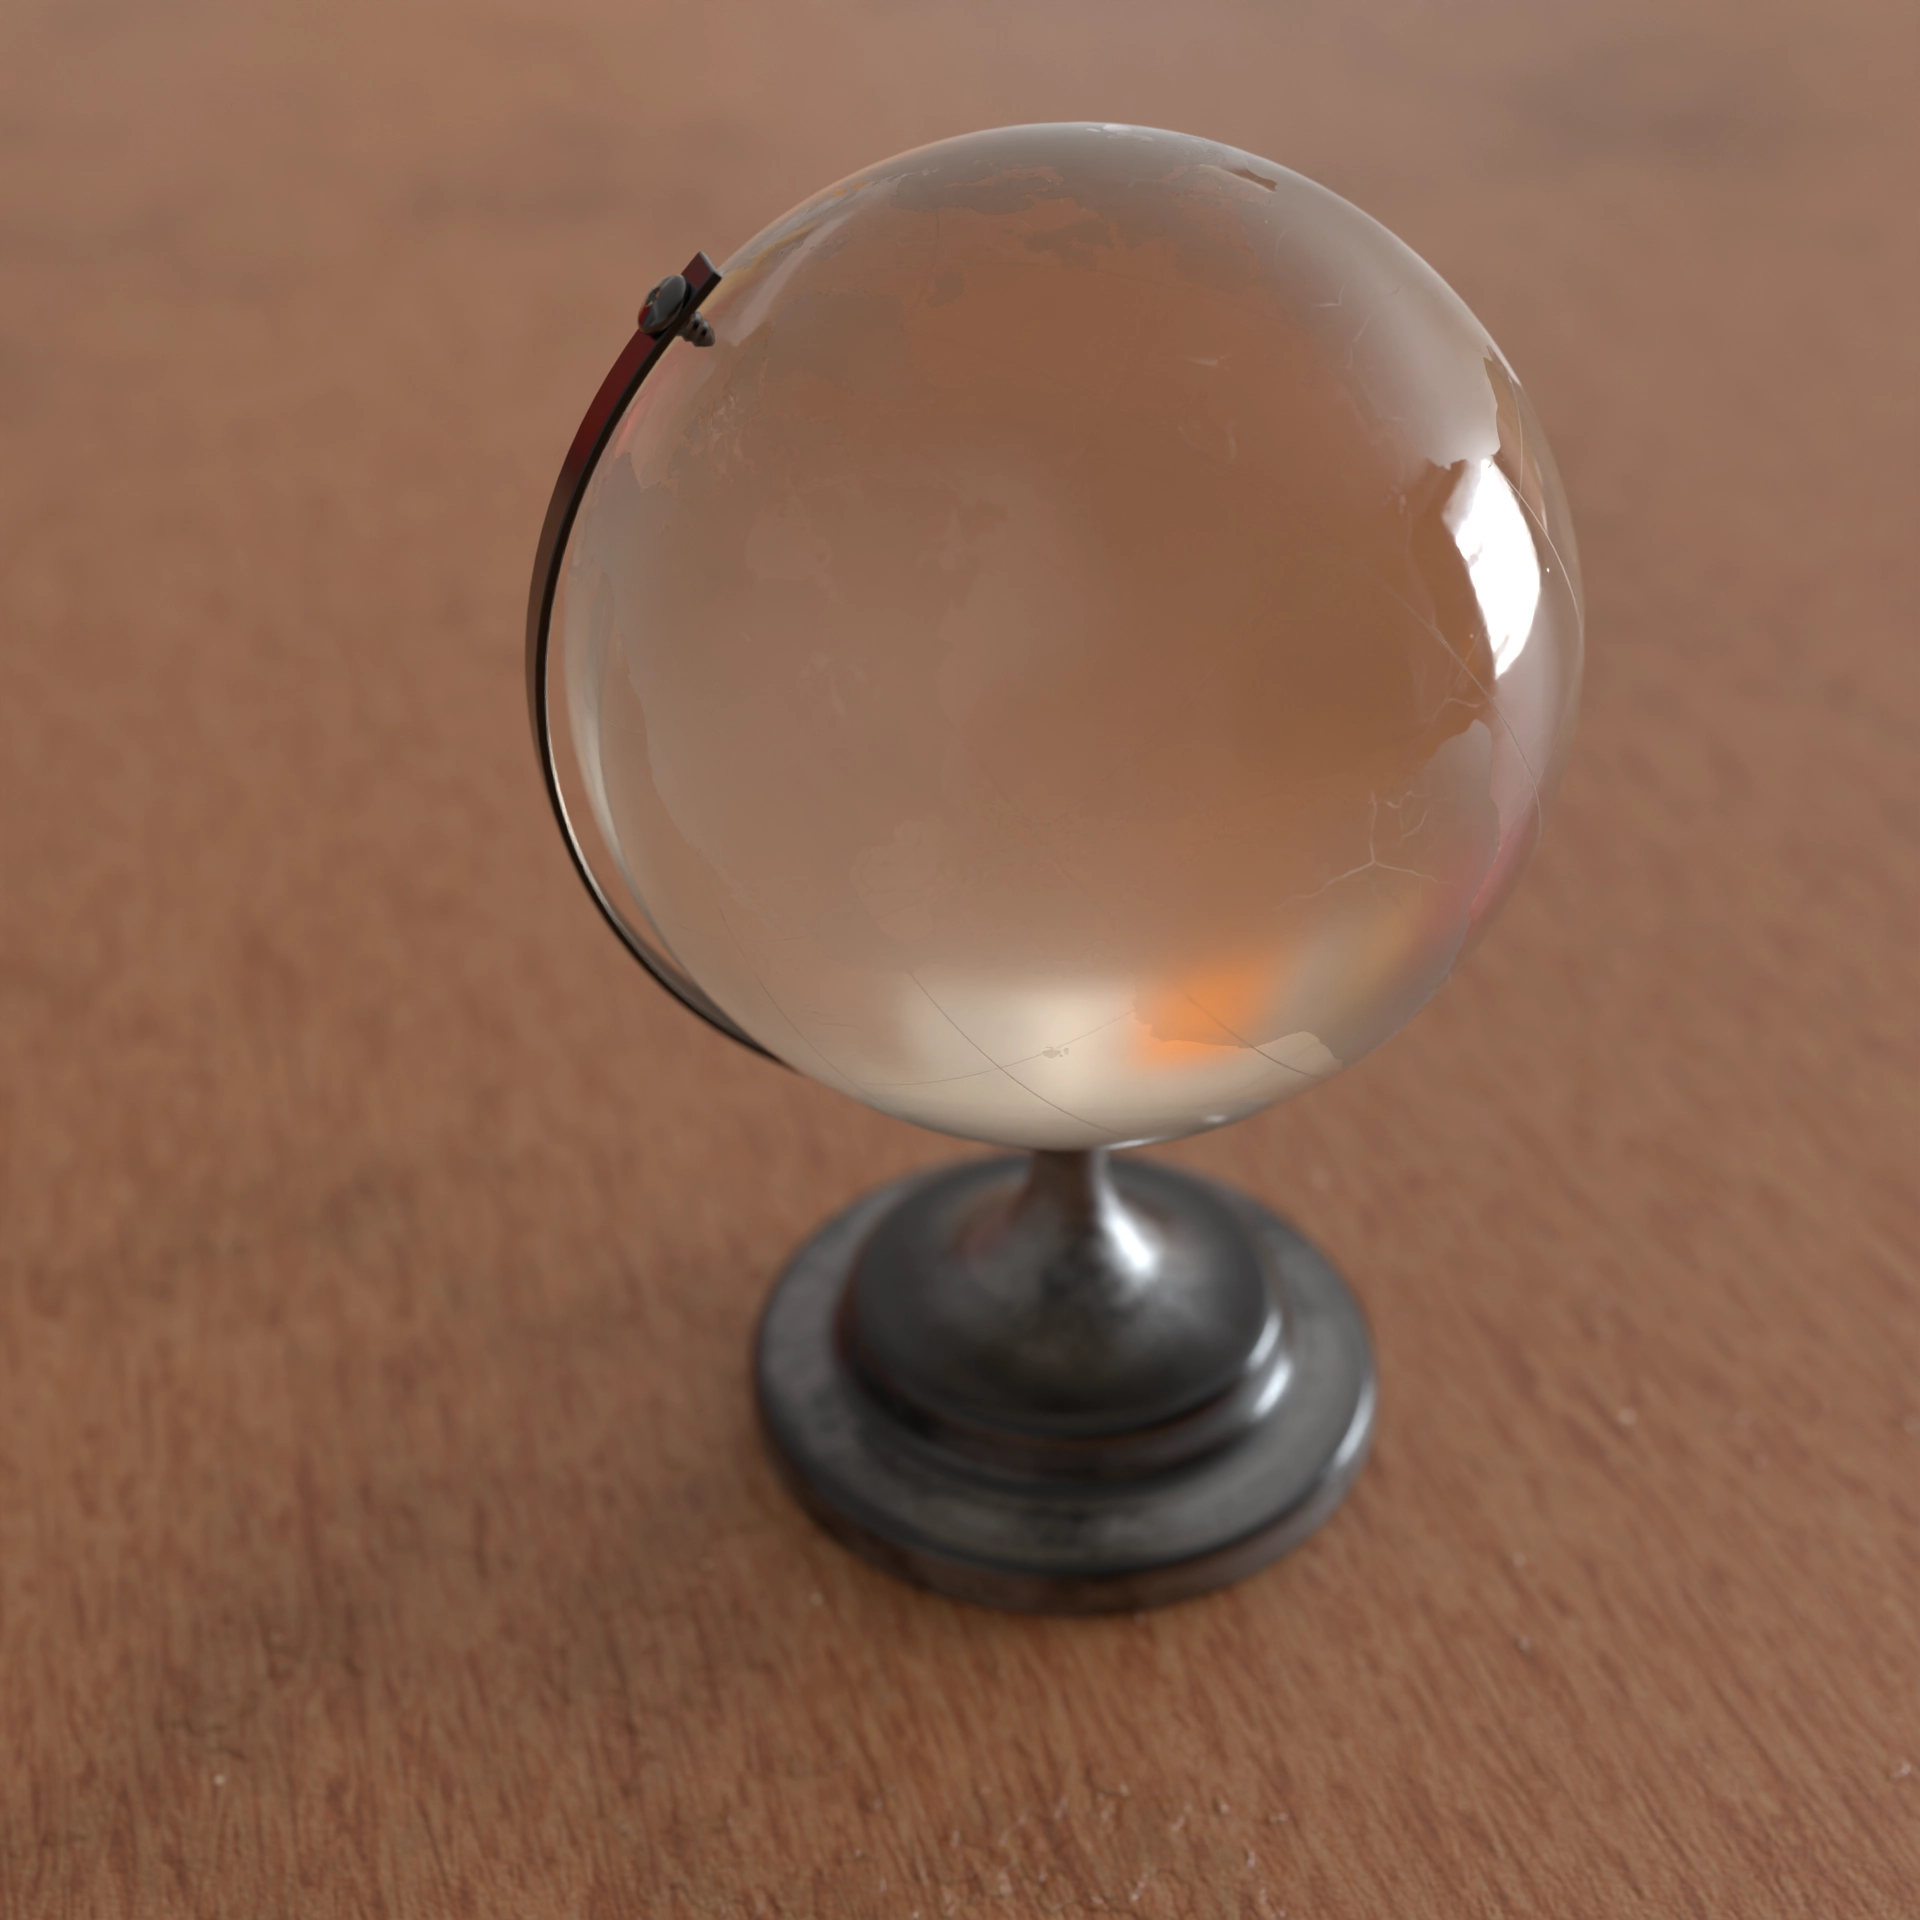 Photorealism attempt of my glass globe on my desk